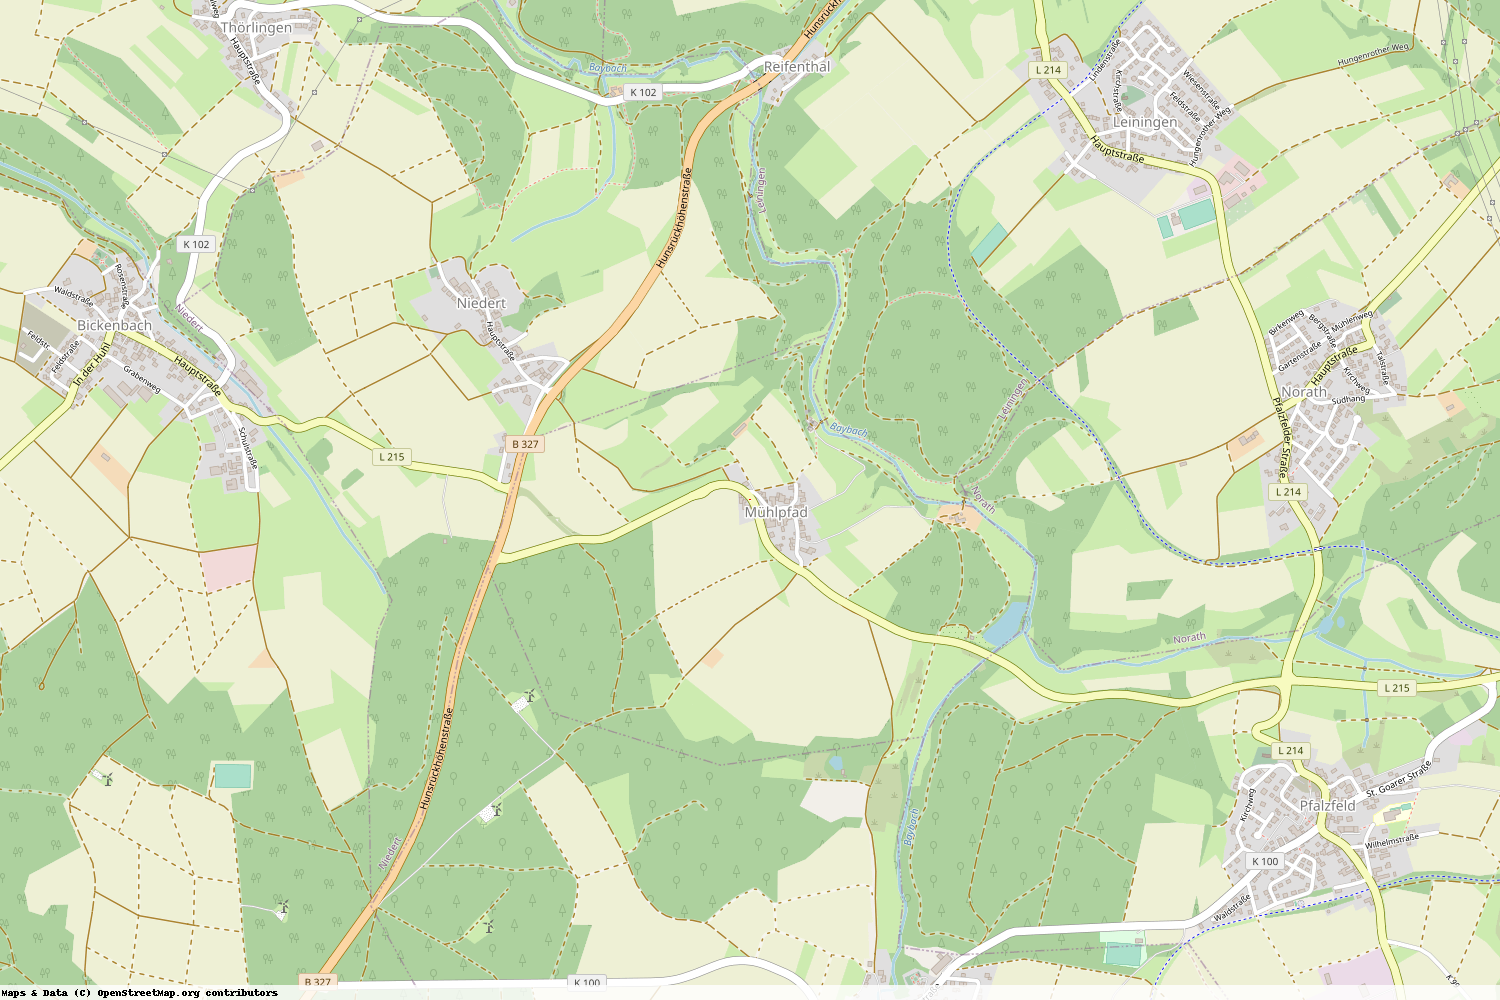 Ist gerade Stromausfall in Rheinland-Pfalz - Rhein-Hunsrück-Kreis - Mühlpfad?